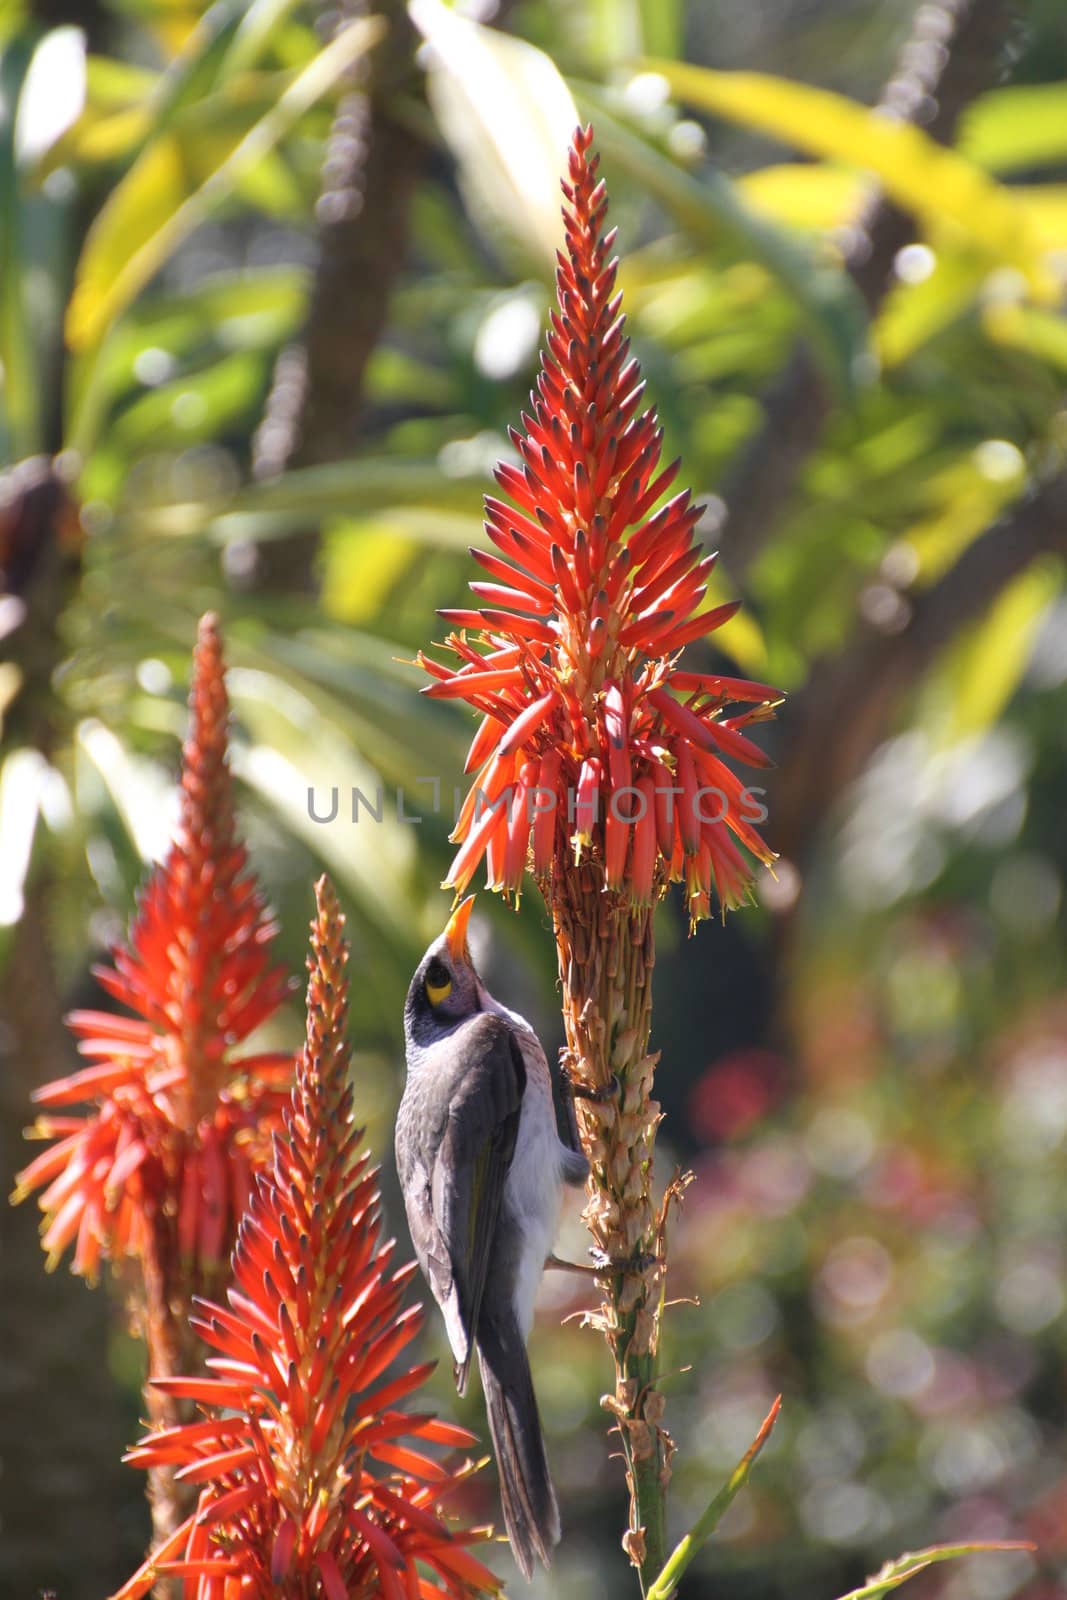 Australian bird feeding on a flower by KirbyWalkerPhotos